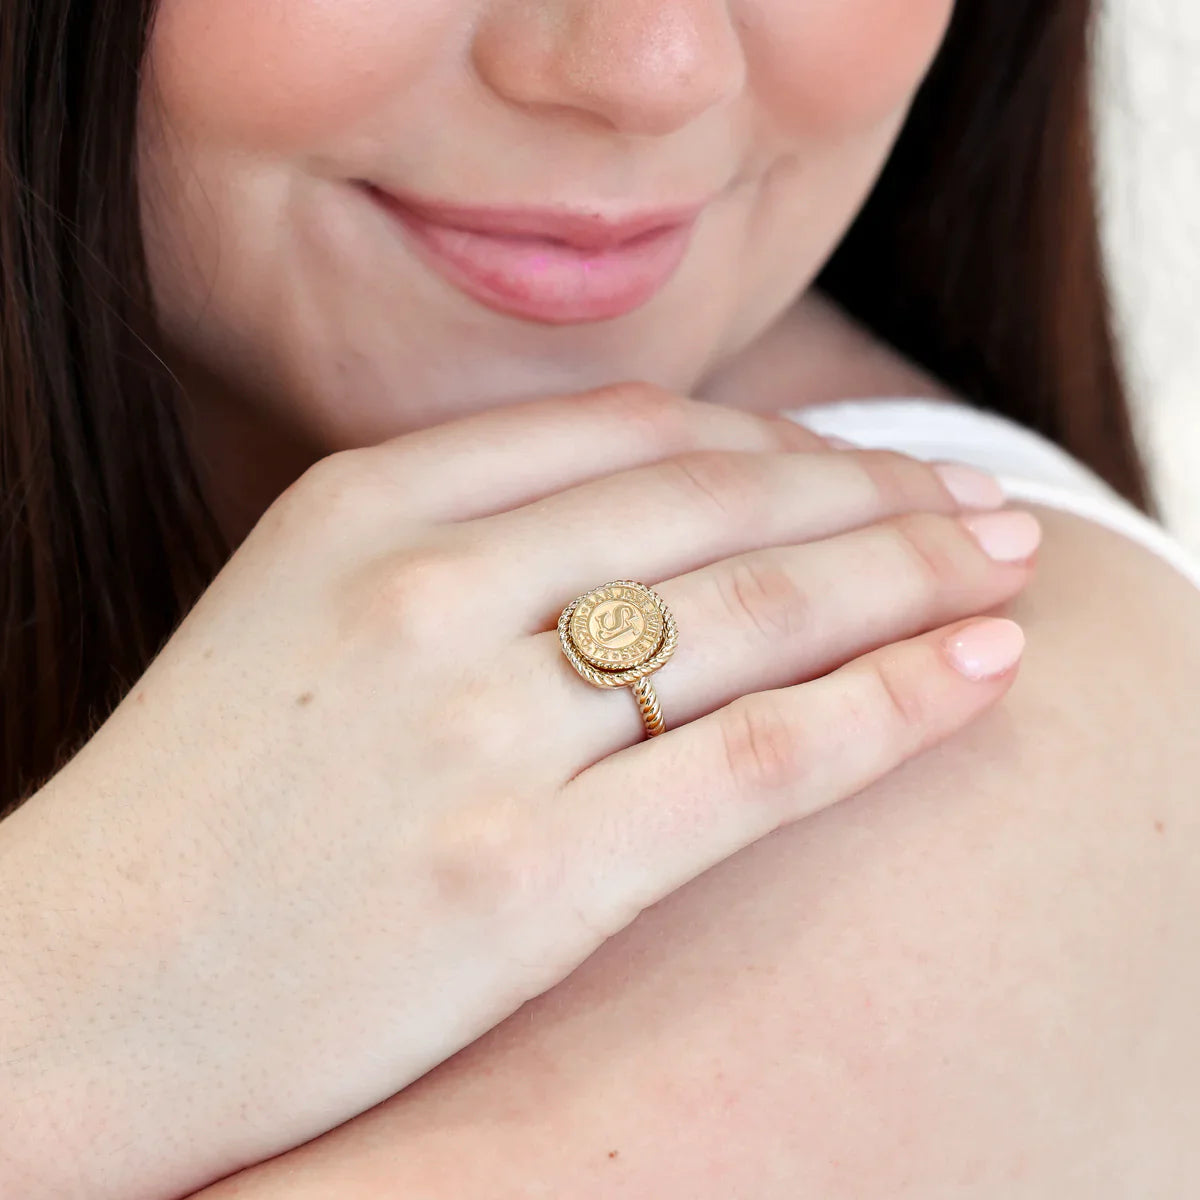 Jeweler Recommendations for engagement rings : r/Denver